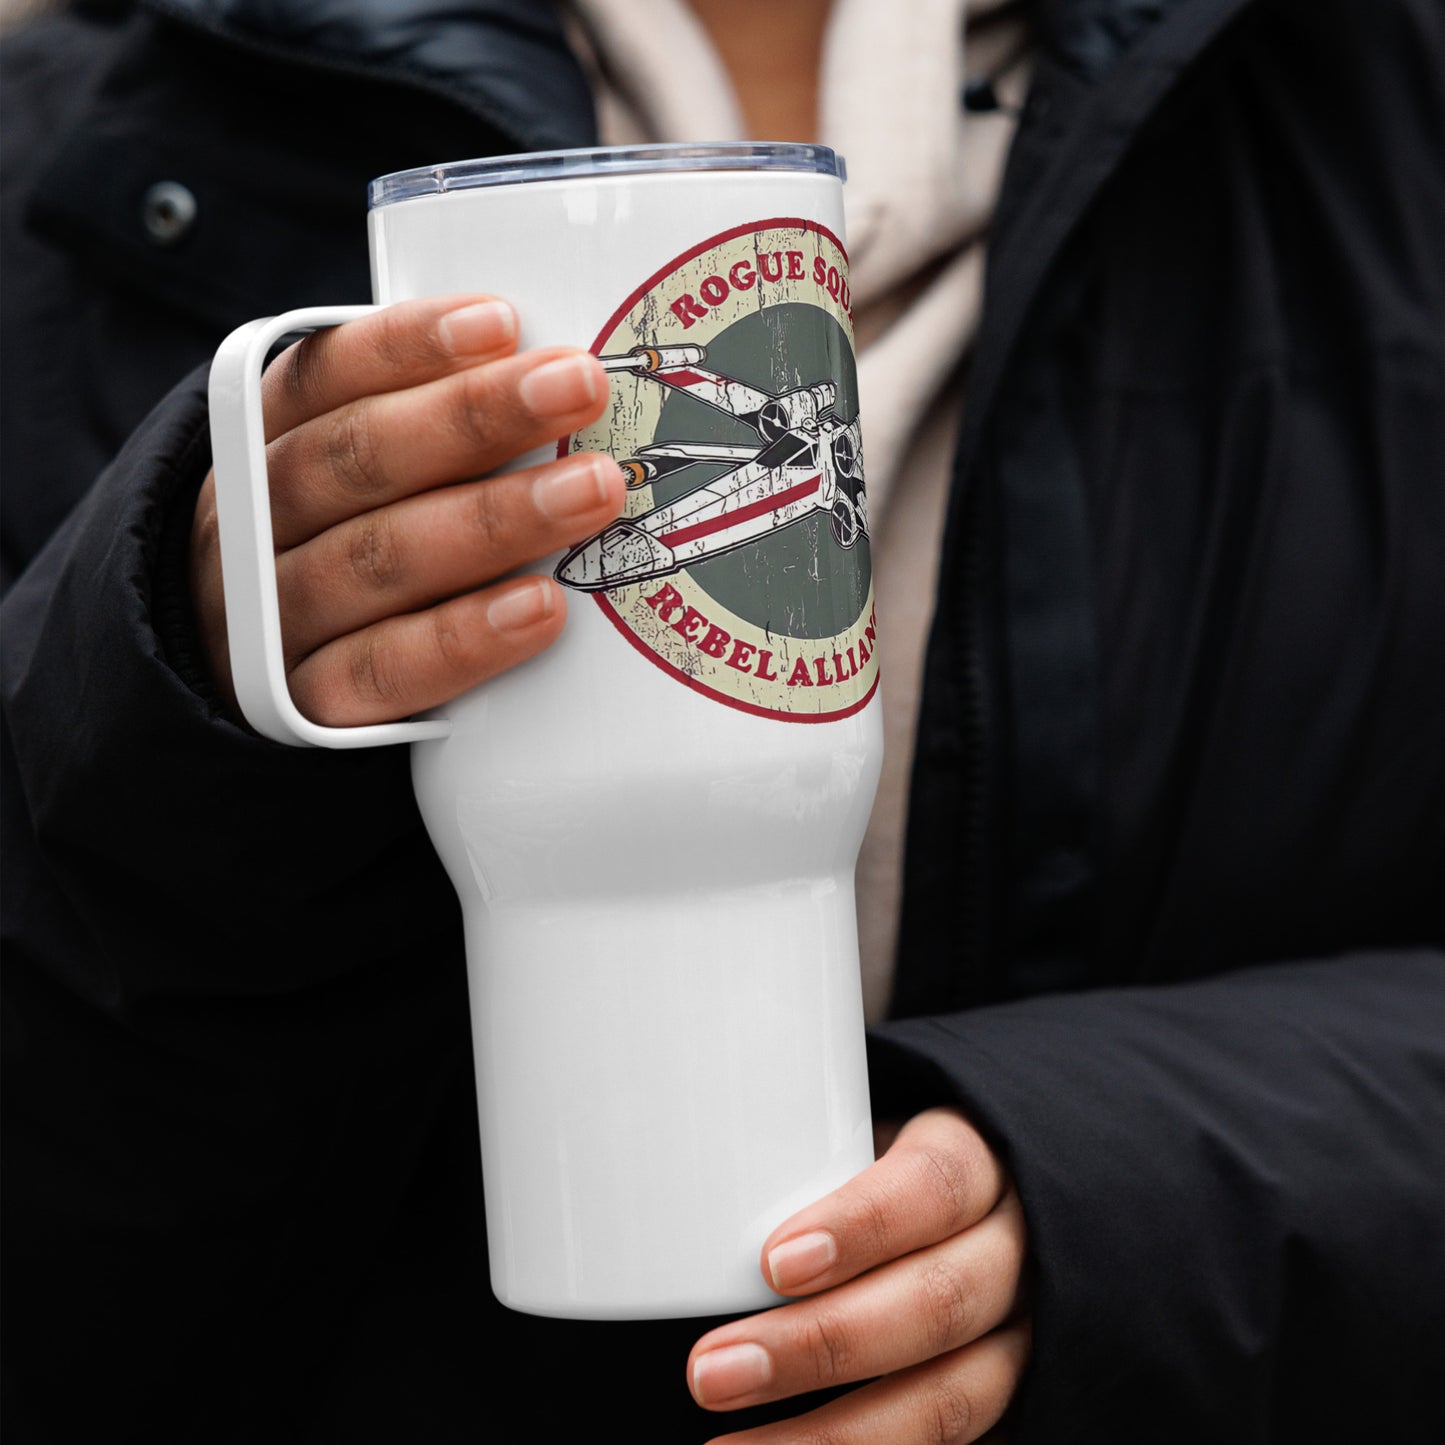 Star Wars Rogue Squadron Travel mug, Thermal Mug with Handle.